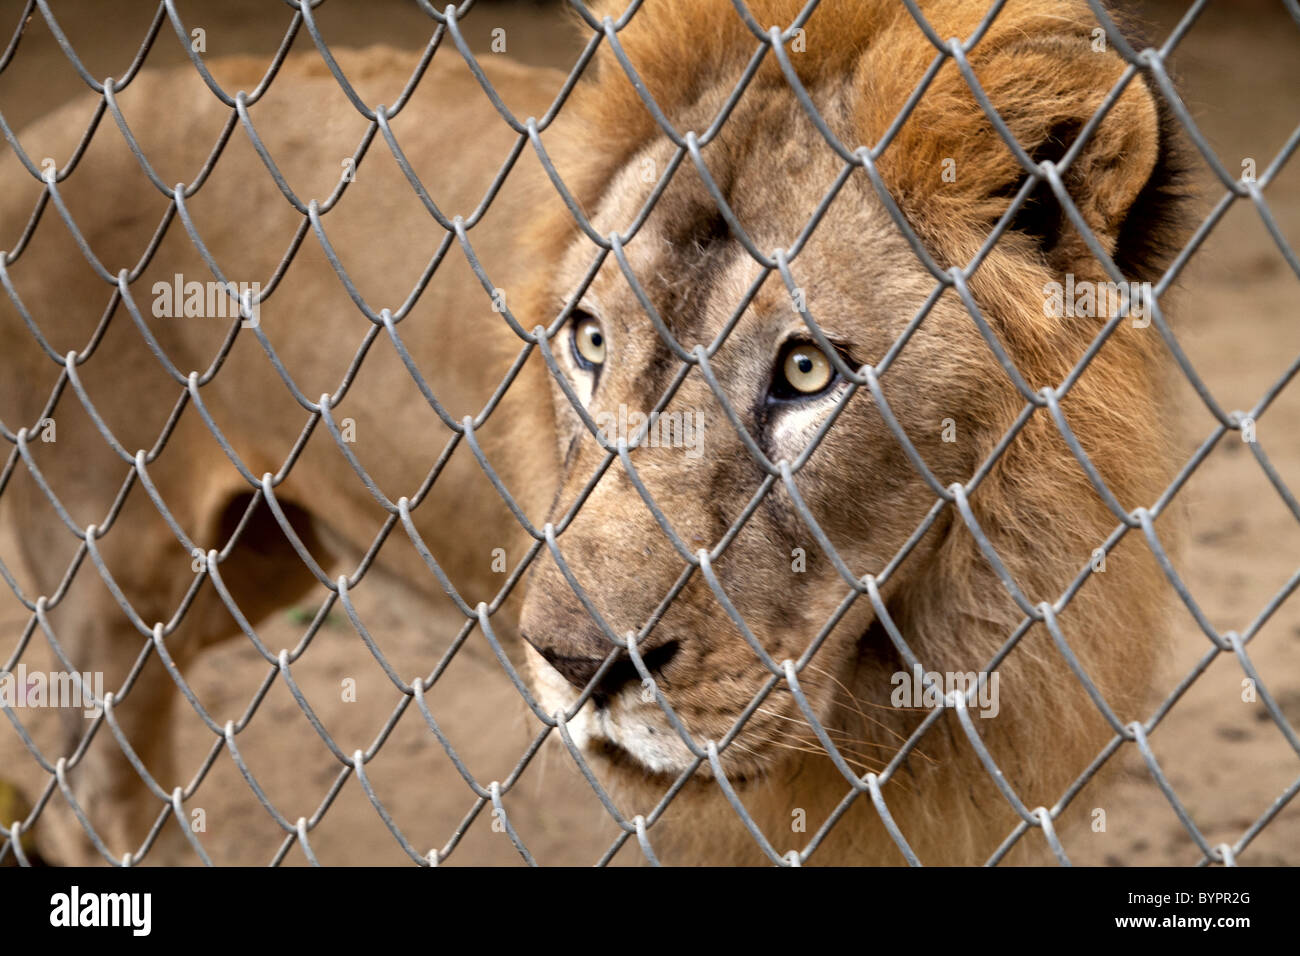 La India, Rajastán, Jaipur, aburrido león detrás del alambre de la jaula Foto de stock